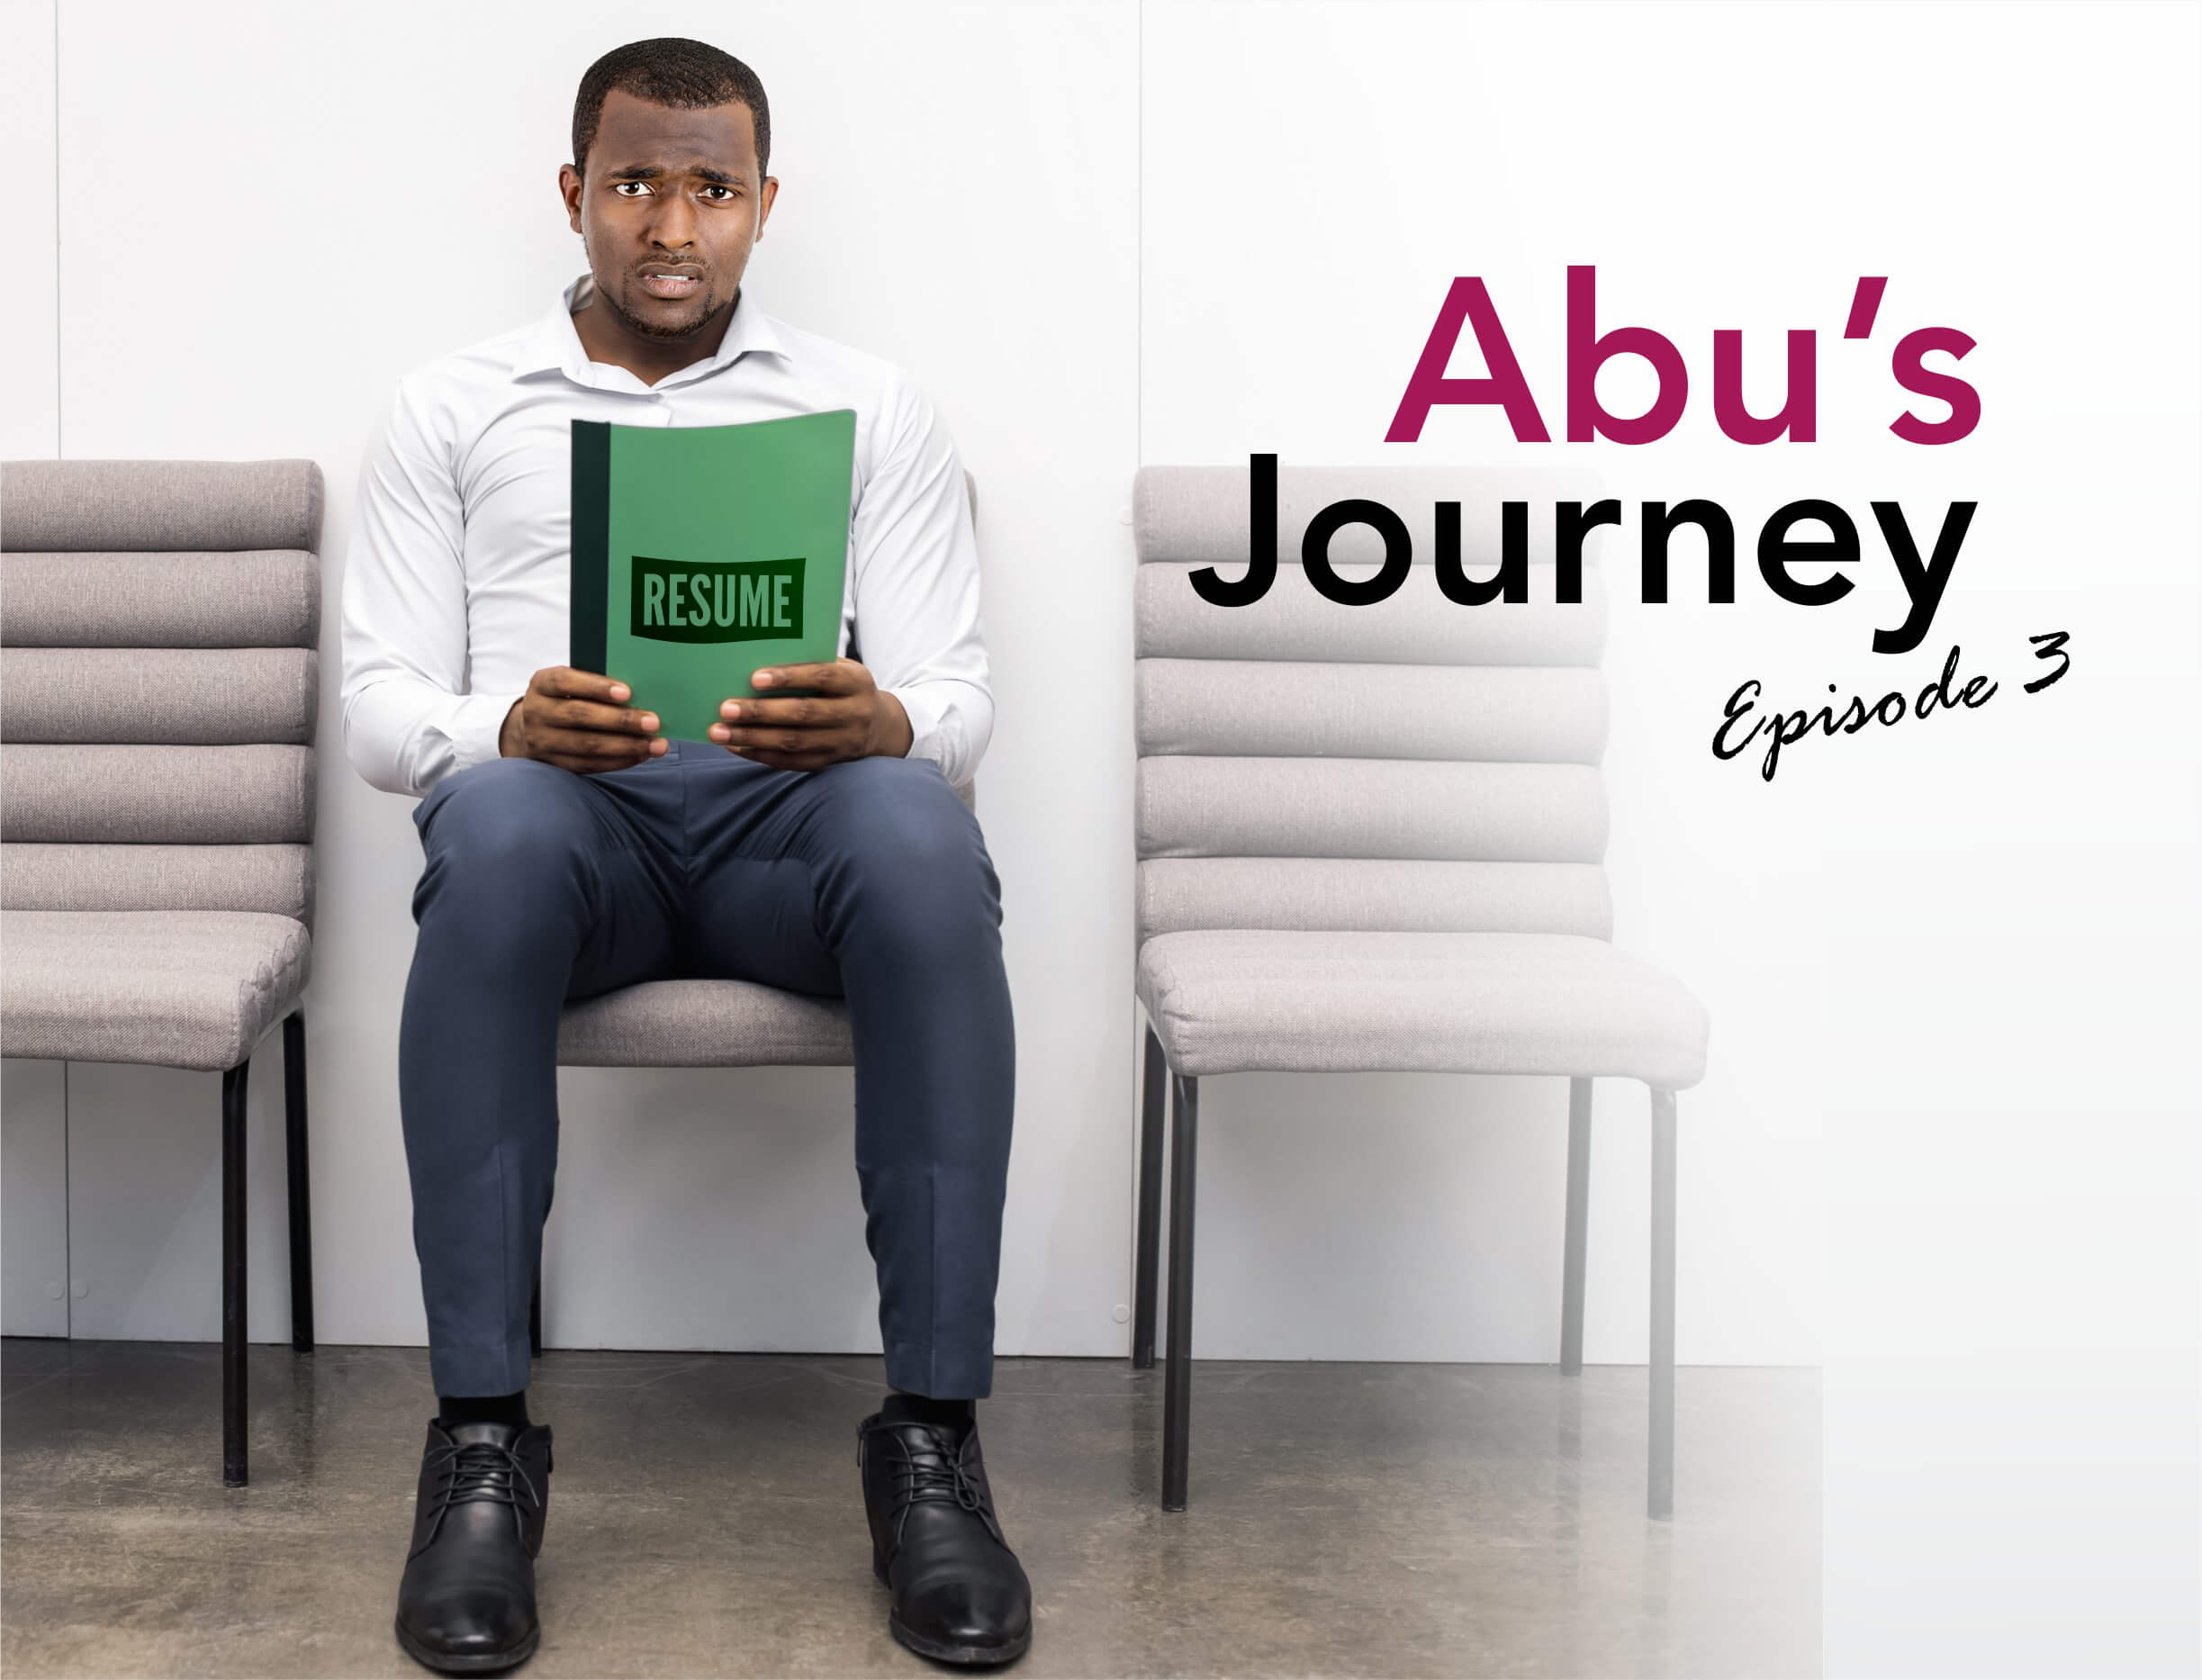 Abu’s journey (3): Job search begins